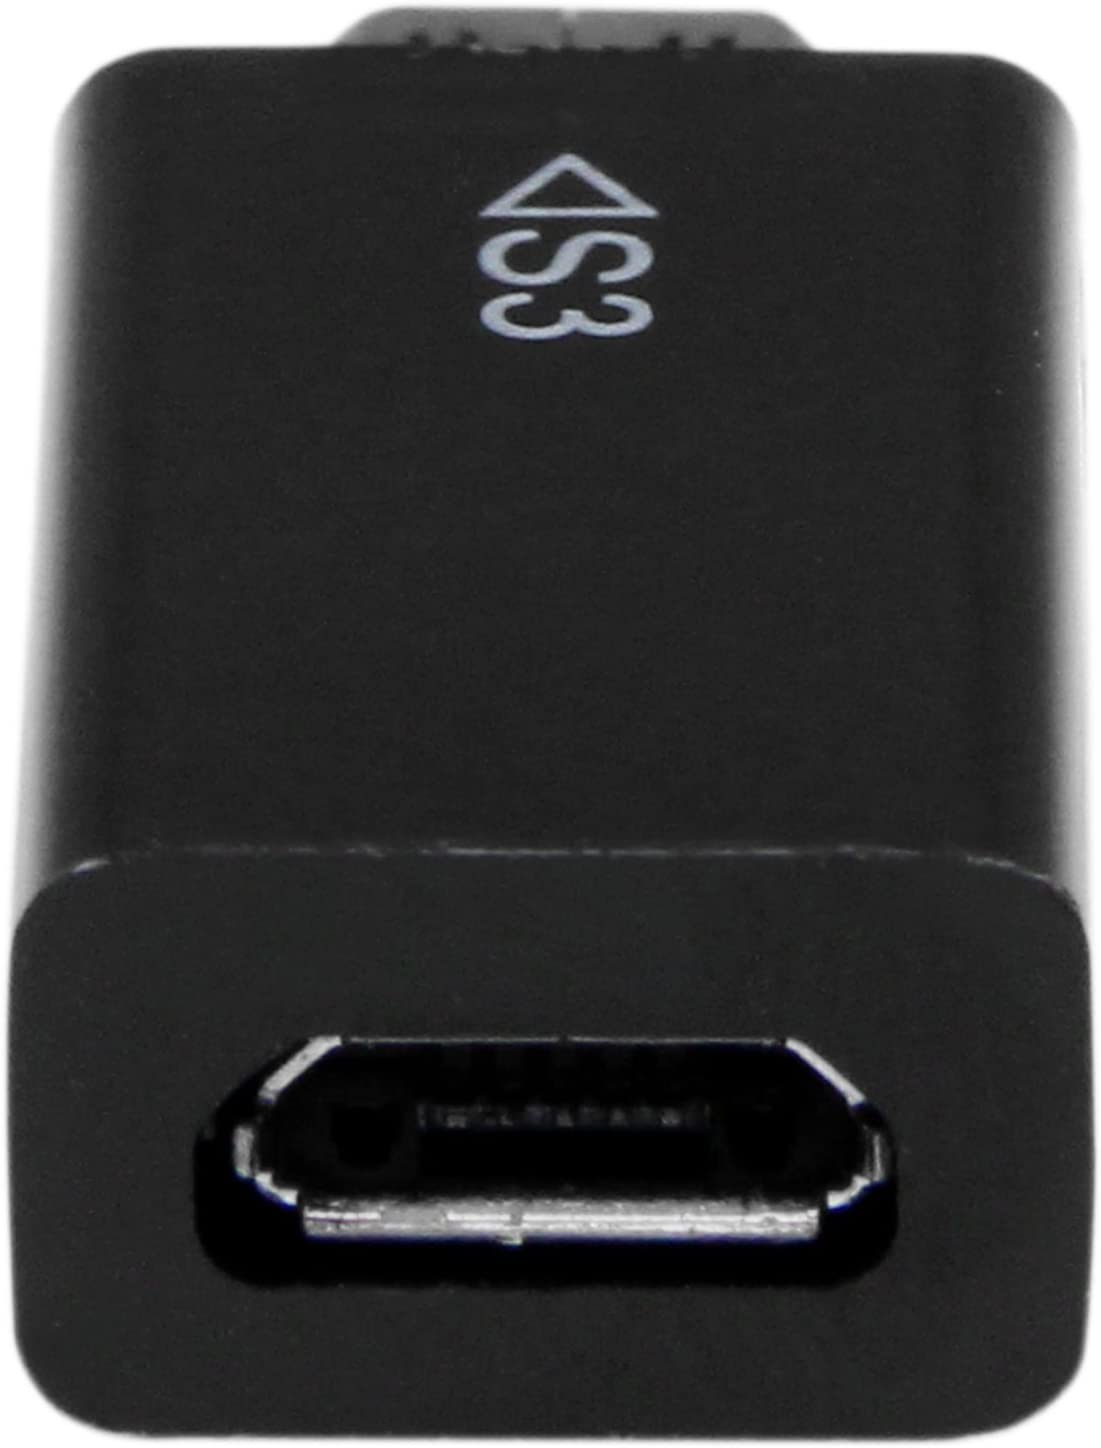 StarTech.com Micro USB 5 pin to 11 pin MHL Adapter for Samsung S3, S4, Note 2 - Micro USB 11 pin (M) to Micro USB B 5 pin (F) Converter (S3MHADAP),White